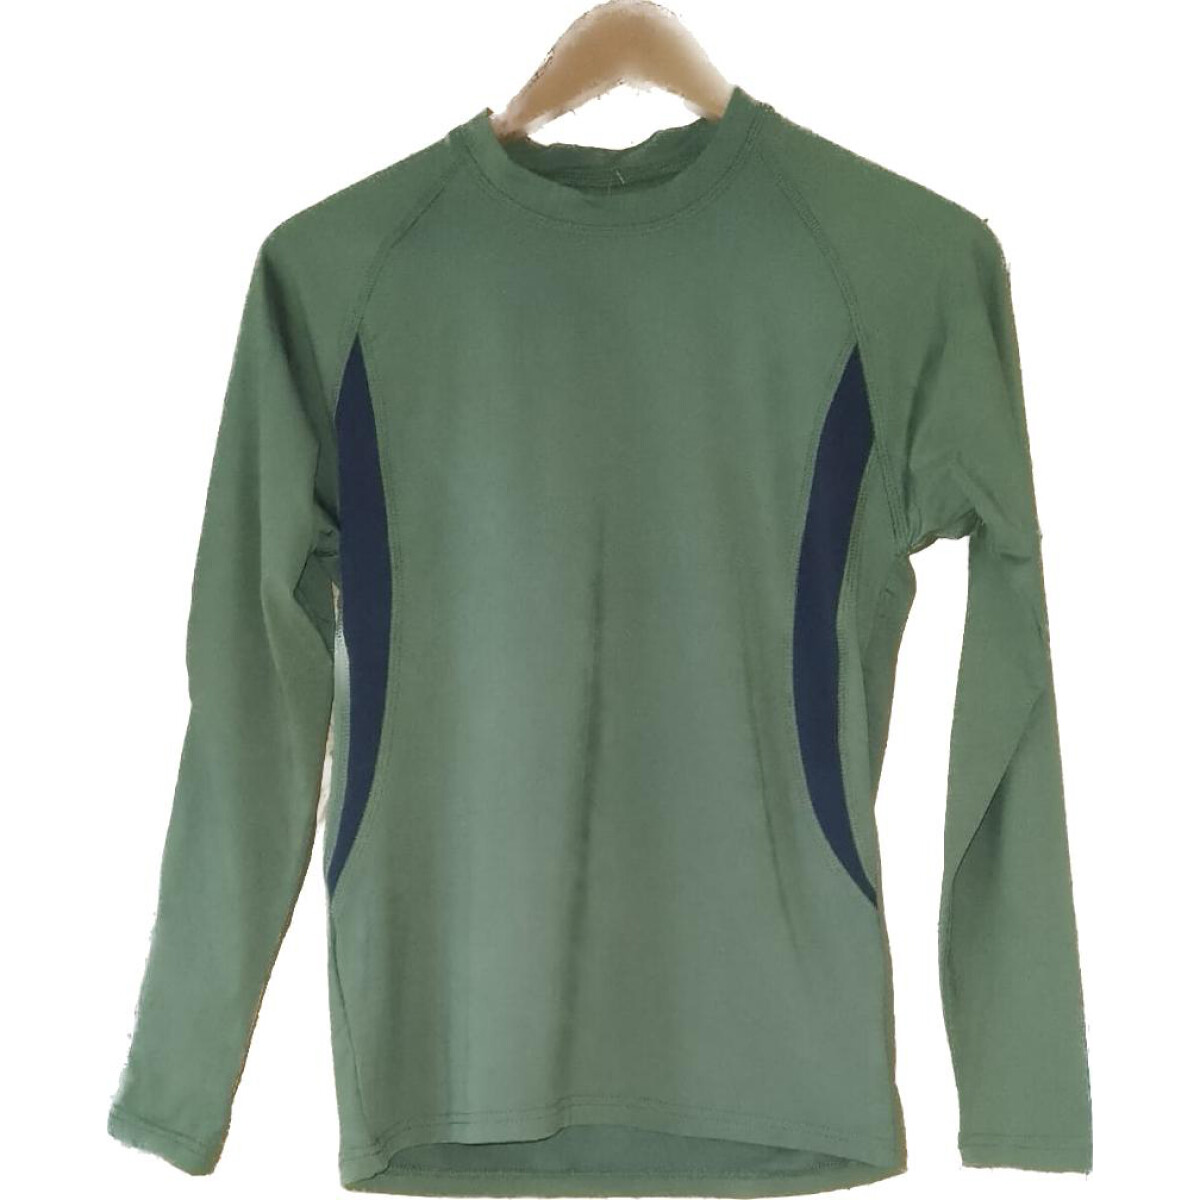 Equipo oristal térmico verde (camiseta/calza).- 